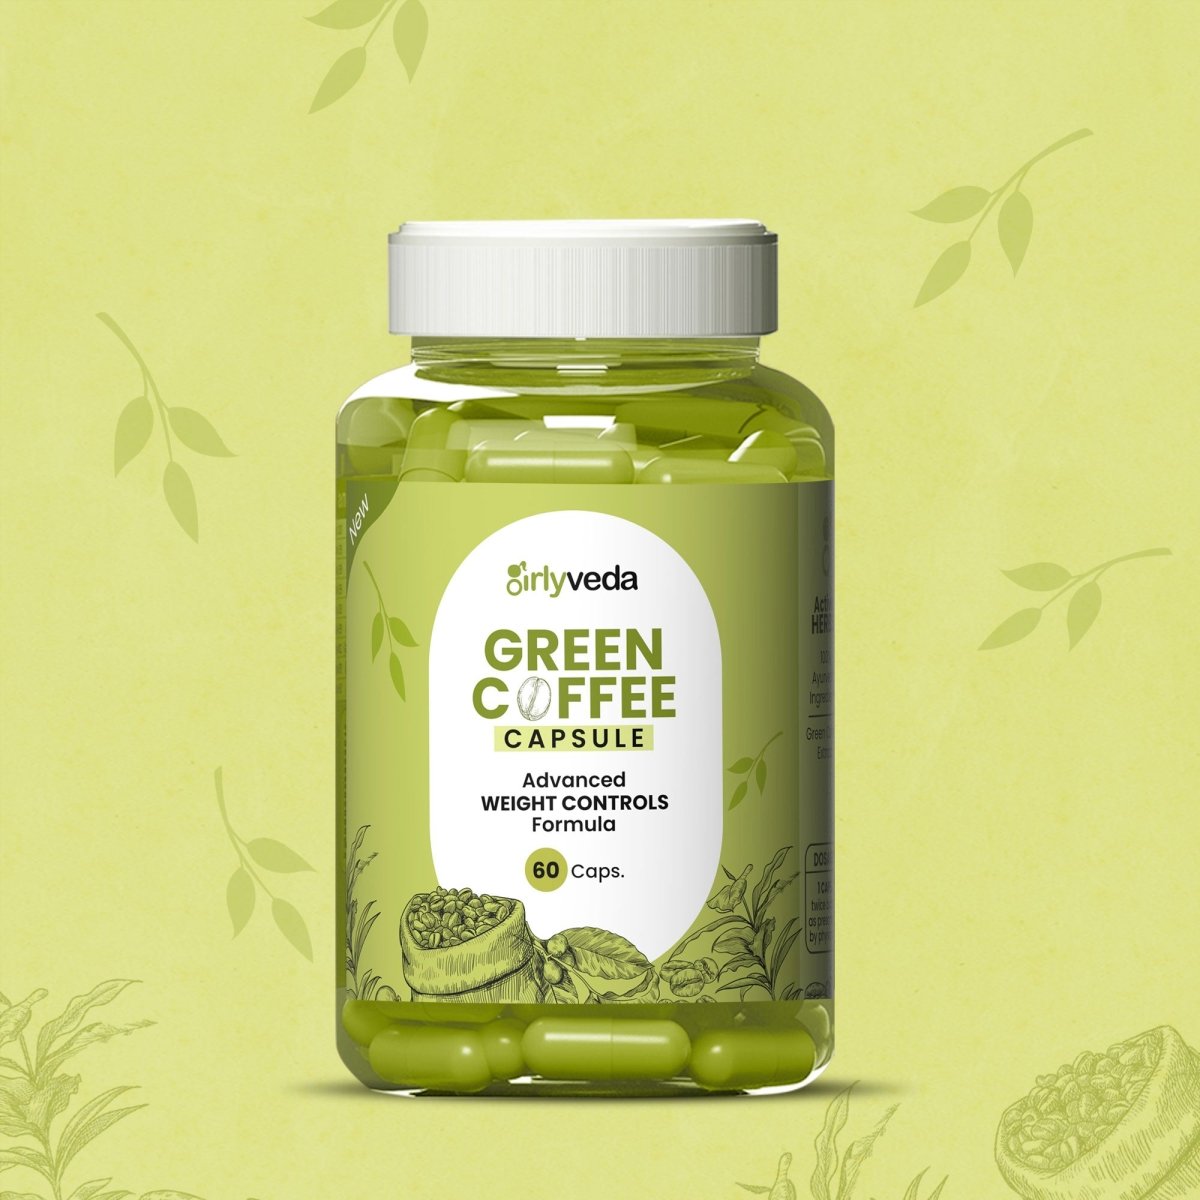 Girlyveda Green Coffee Capsule